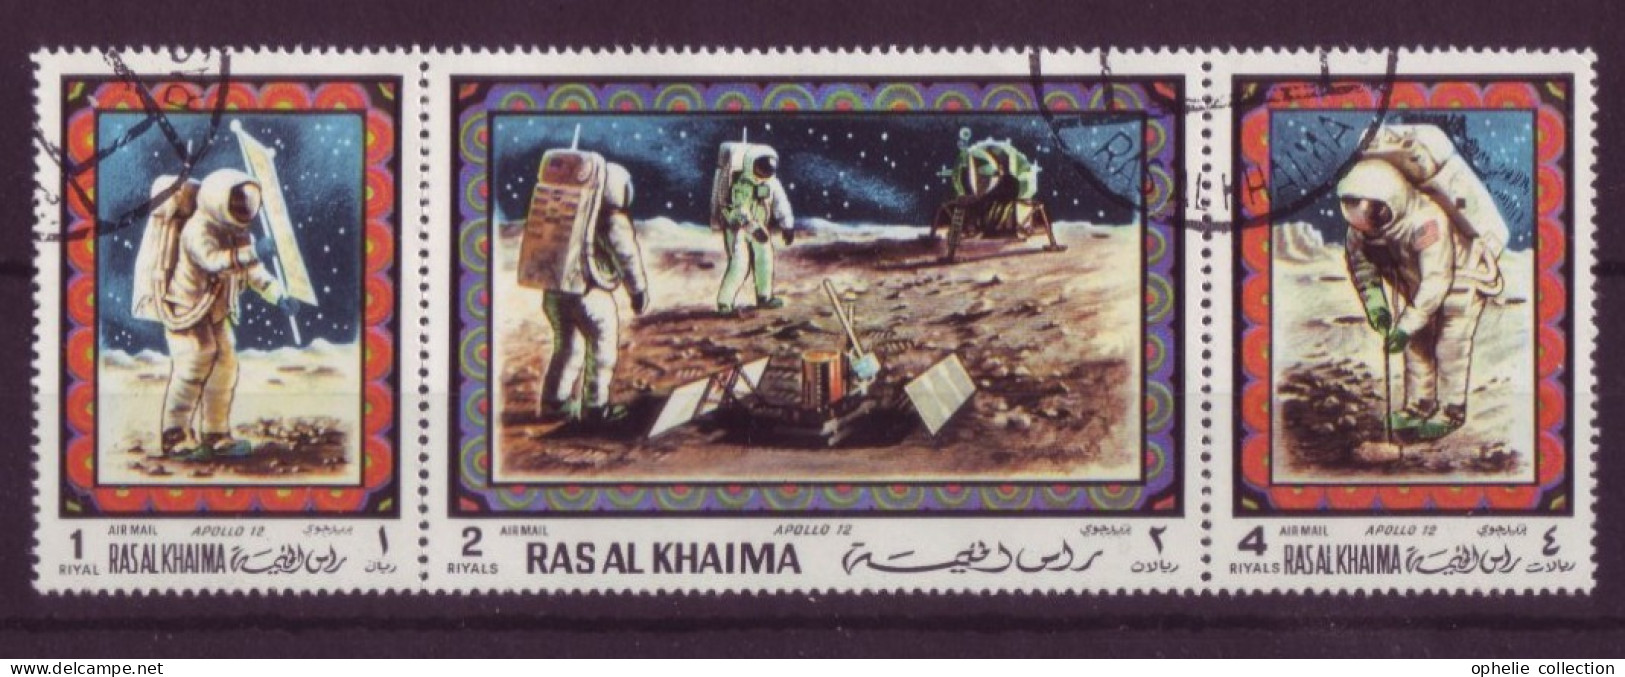 Asie - Ras-el-Khaima - Apollo XII - Bandeau De 3 Timbres - 6941 - Ras Al-Khaimah